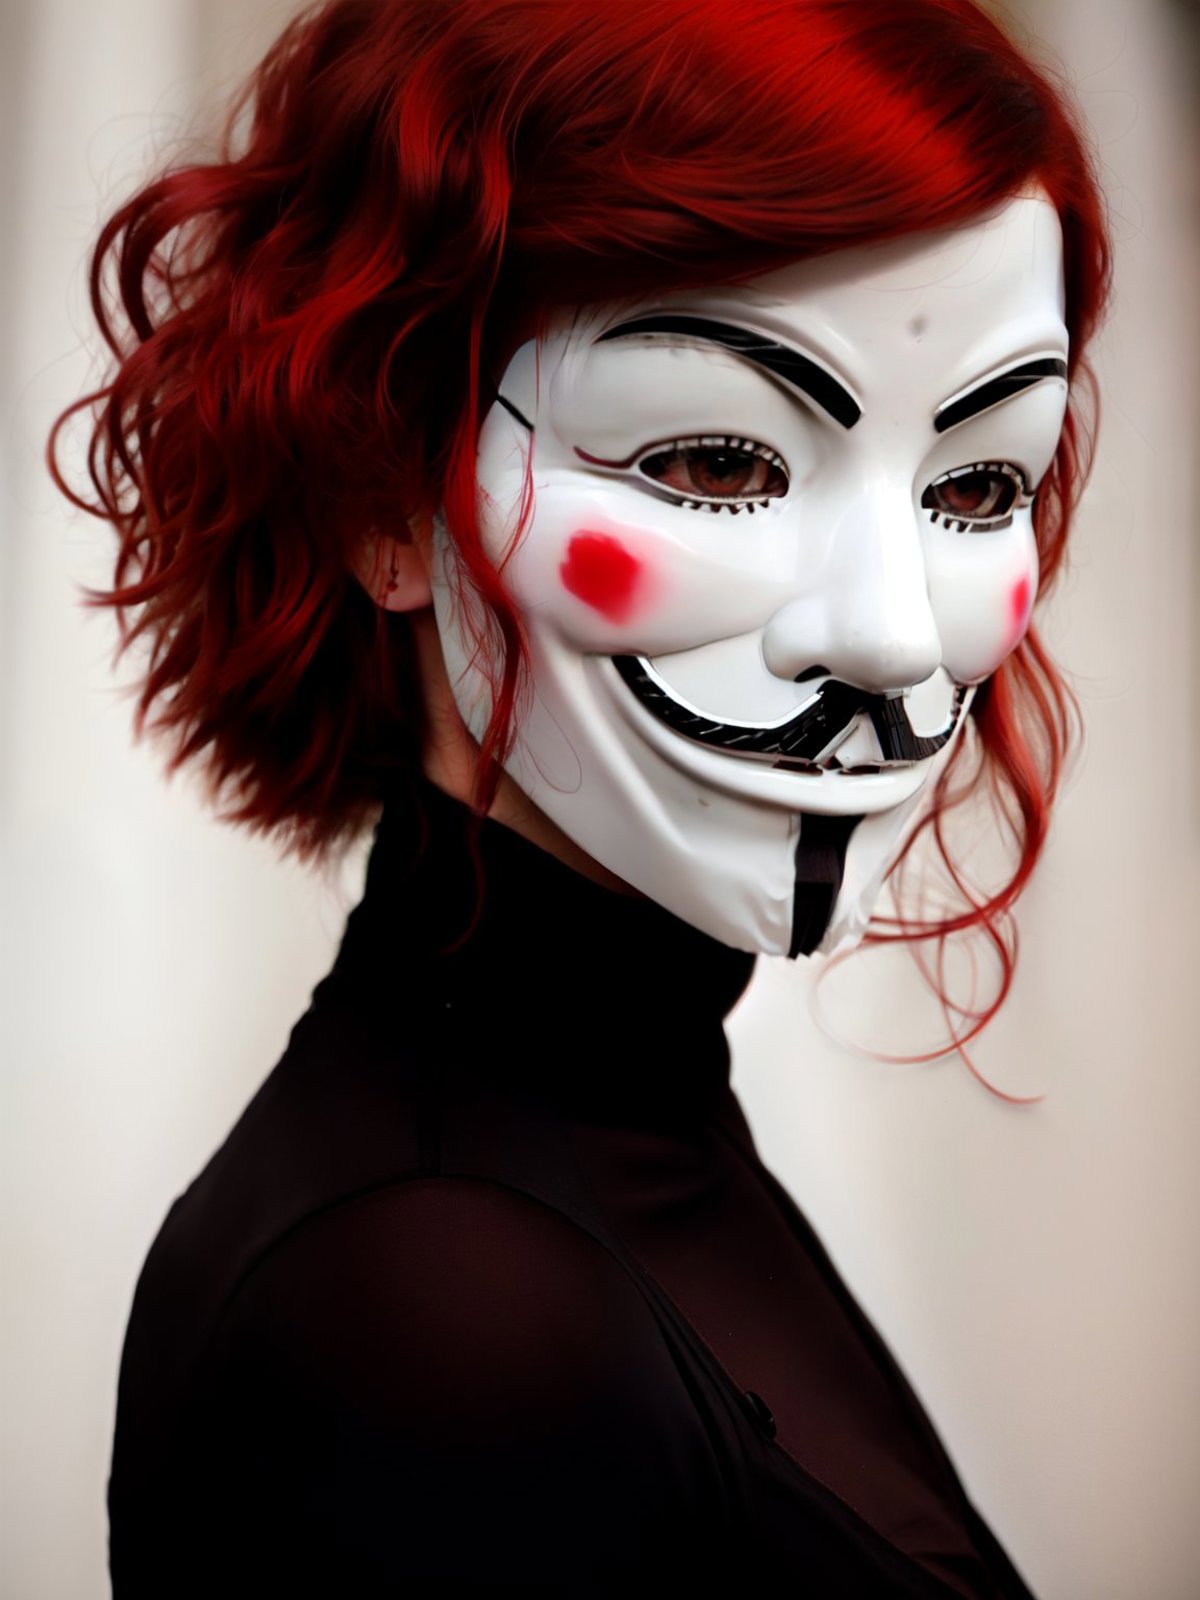 Anonymous Mask image by ARTik_31